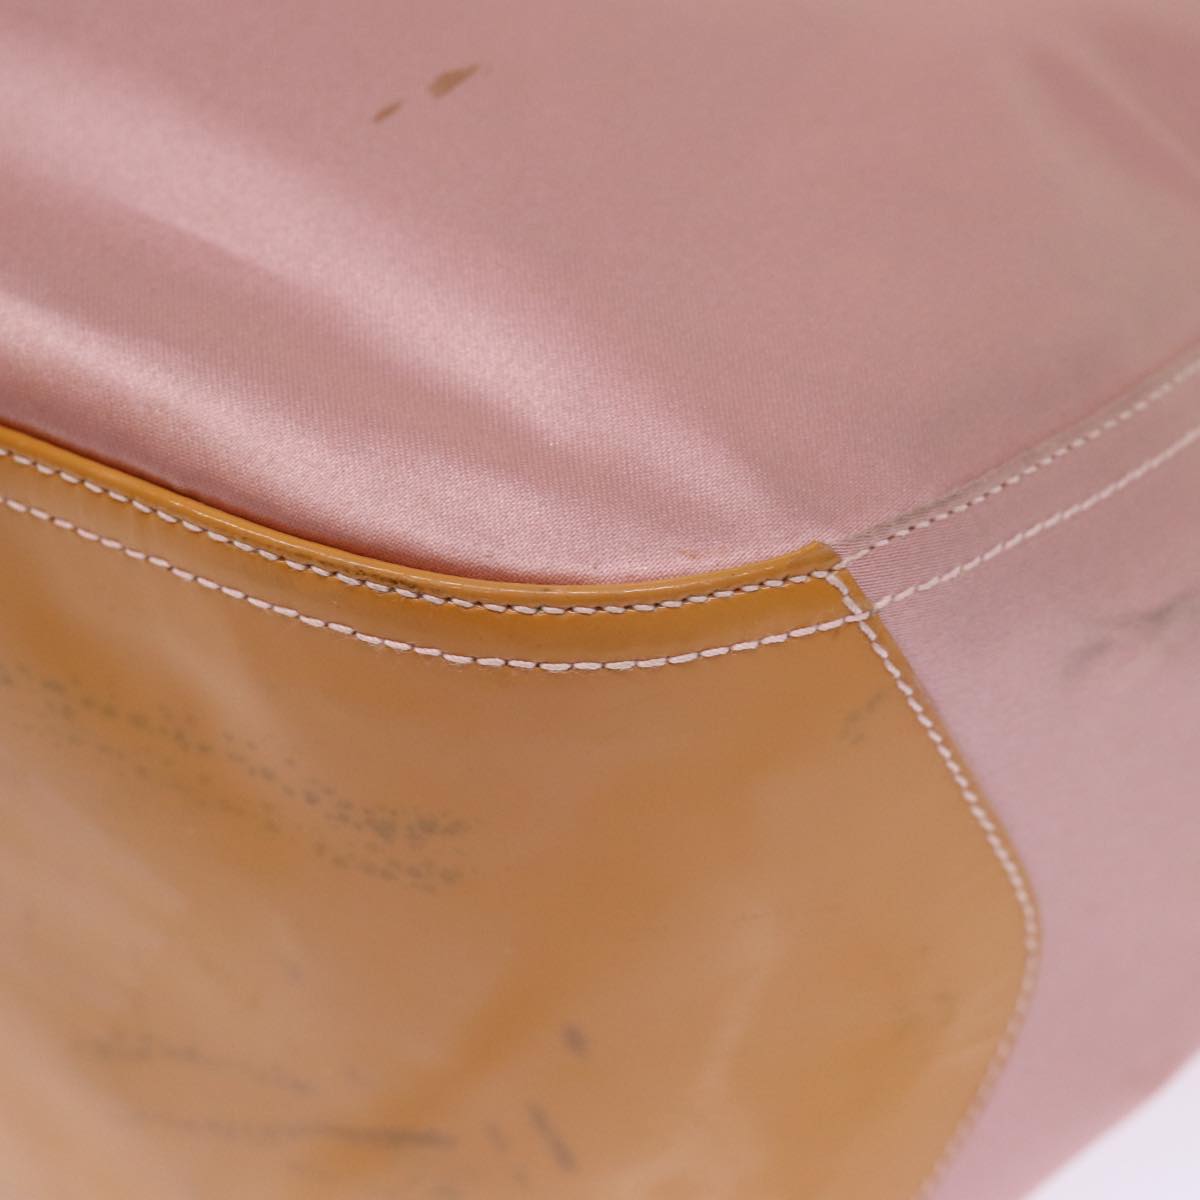 Salvatore Ferragamo Hand Bag Satin Pink Auth 77217